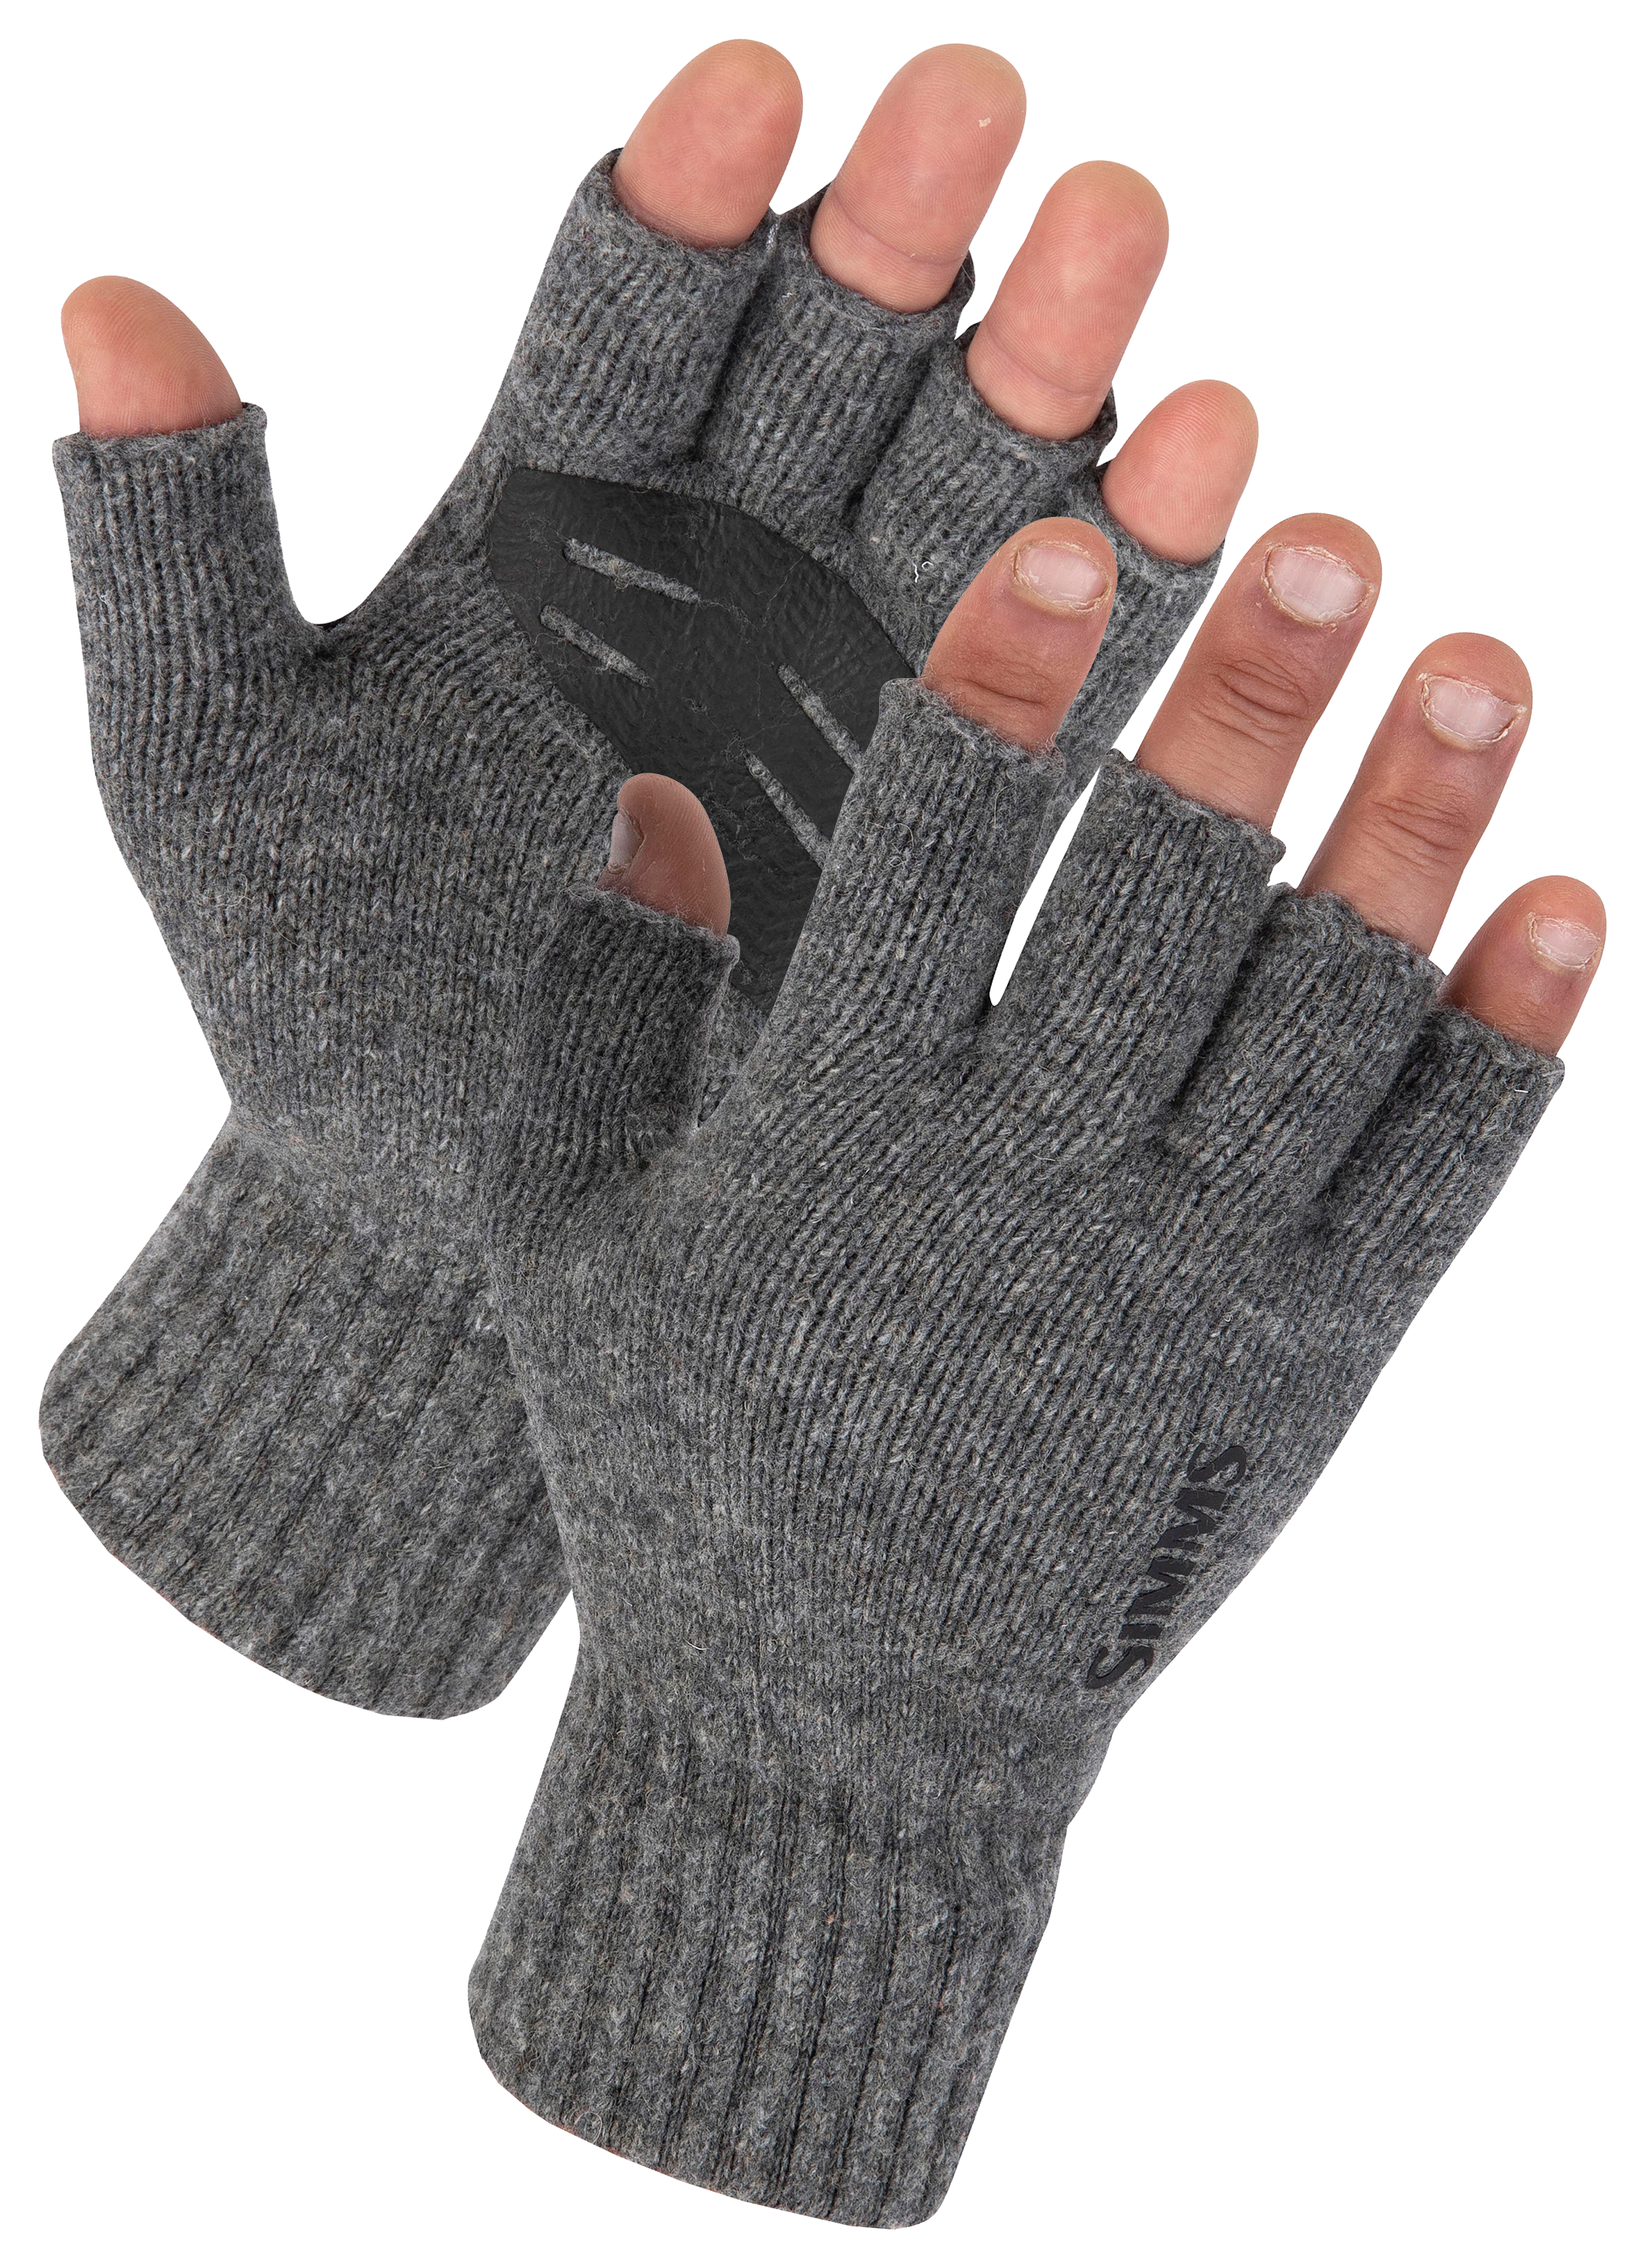 Simms Wool Half Finger Glove